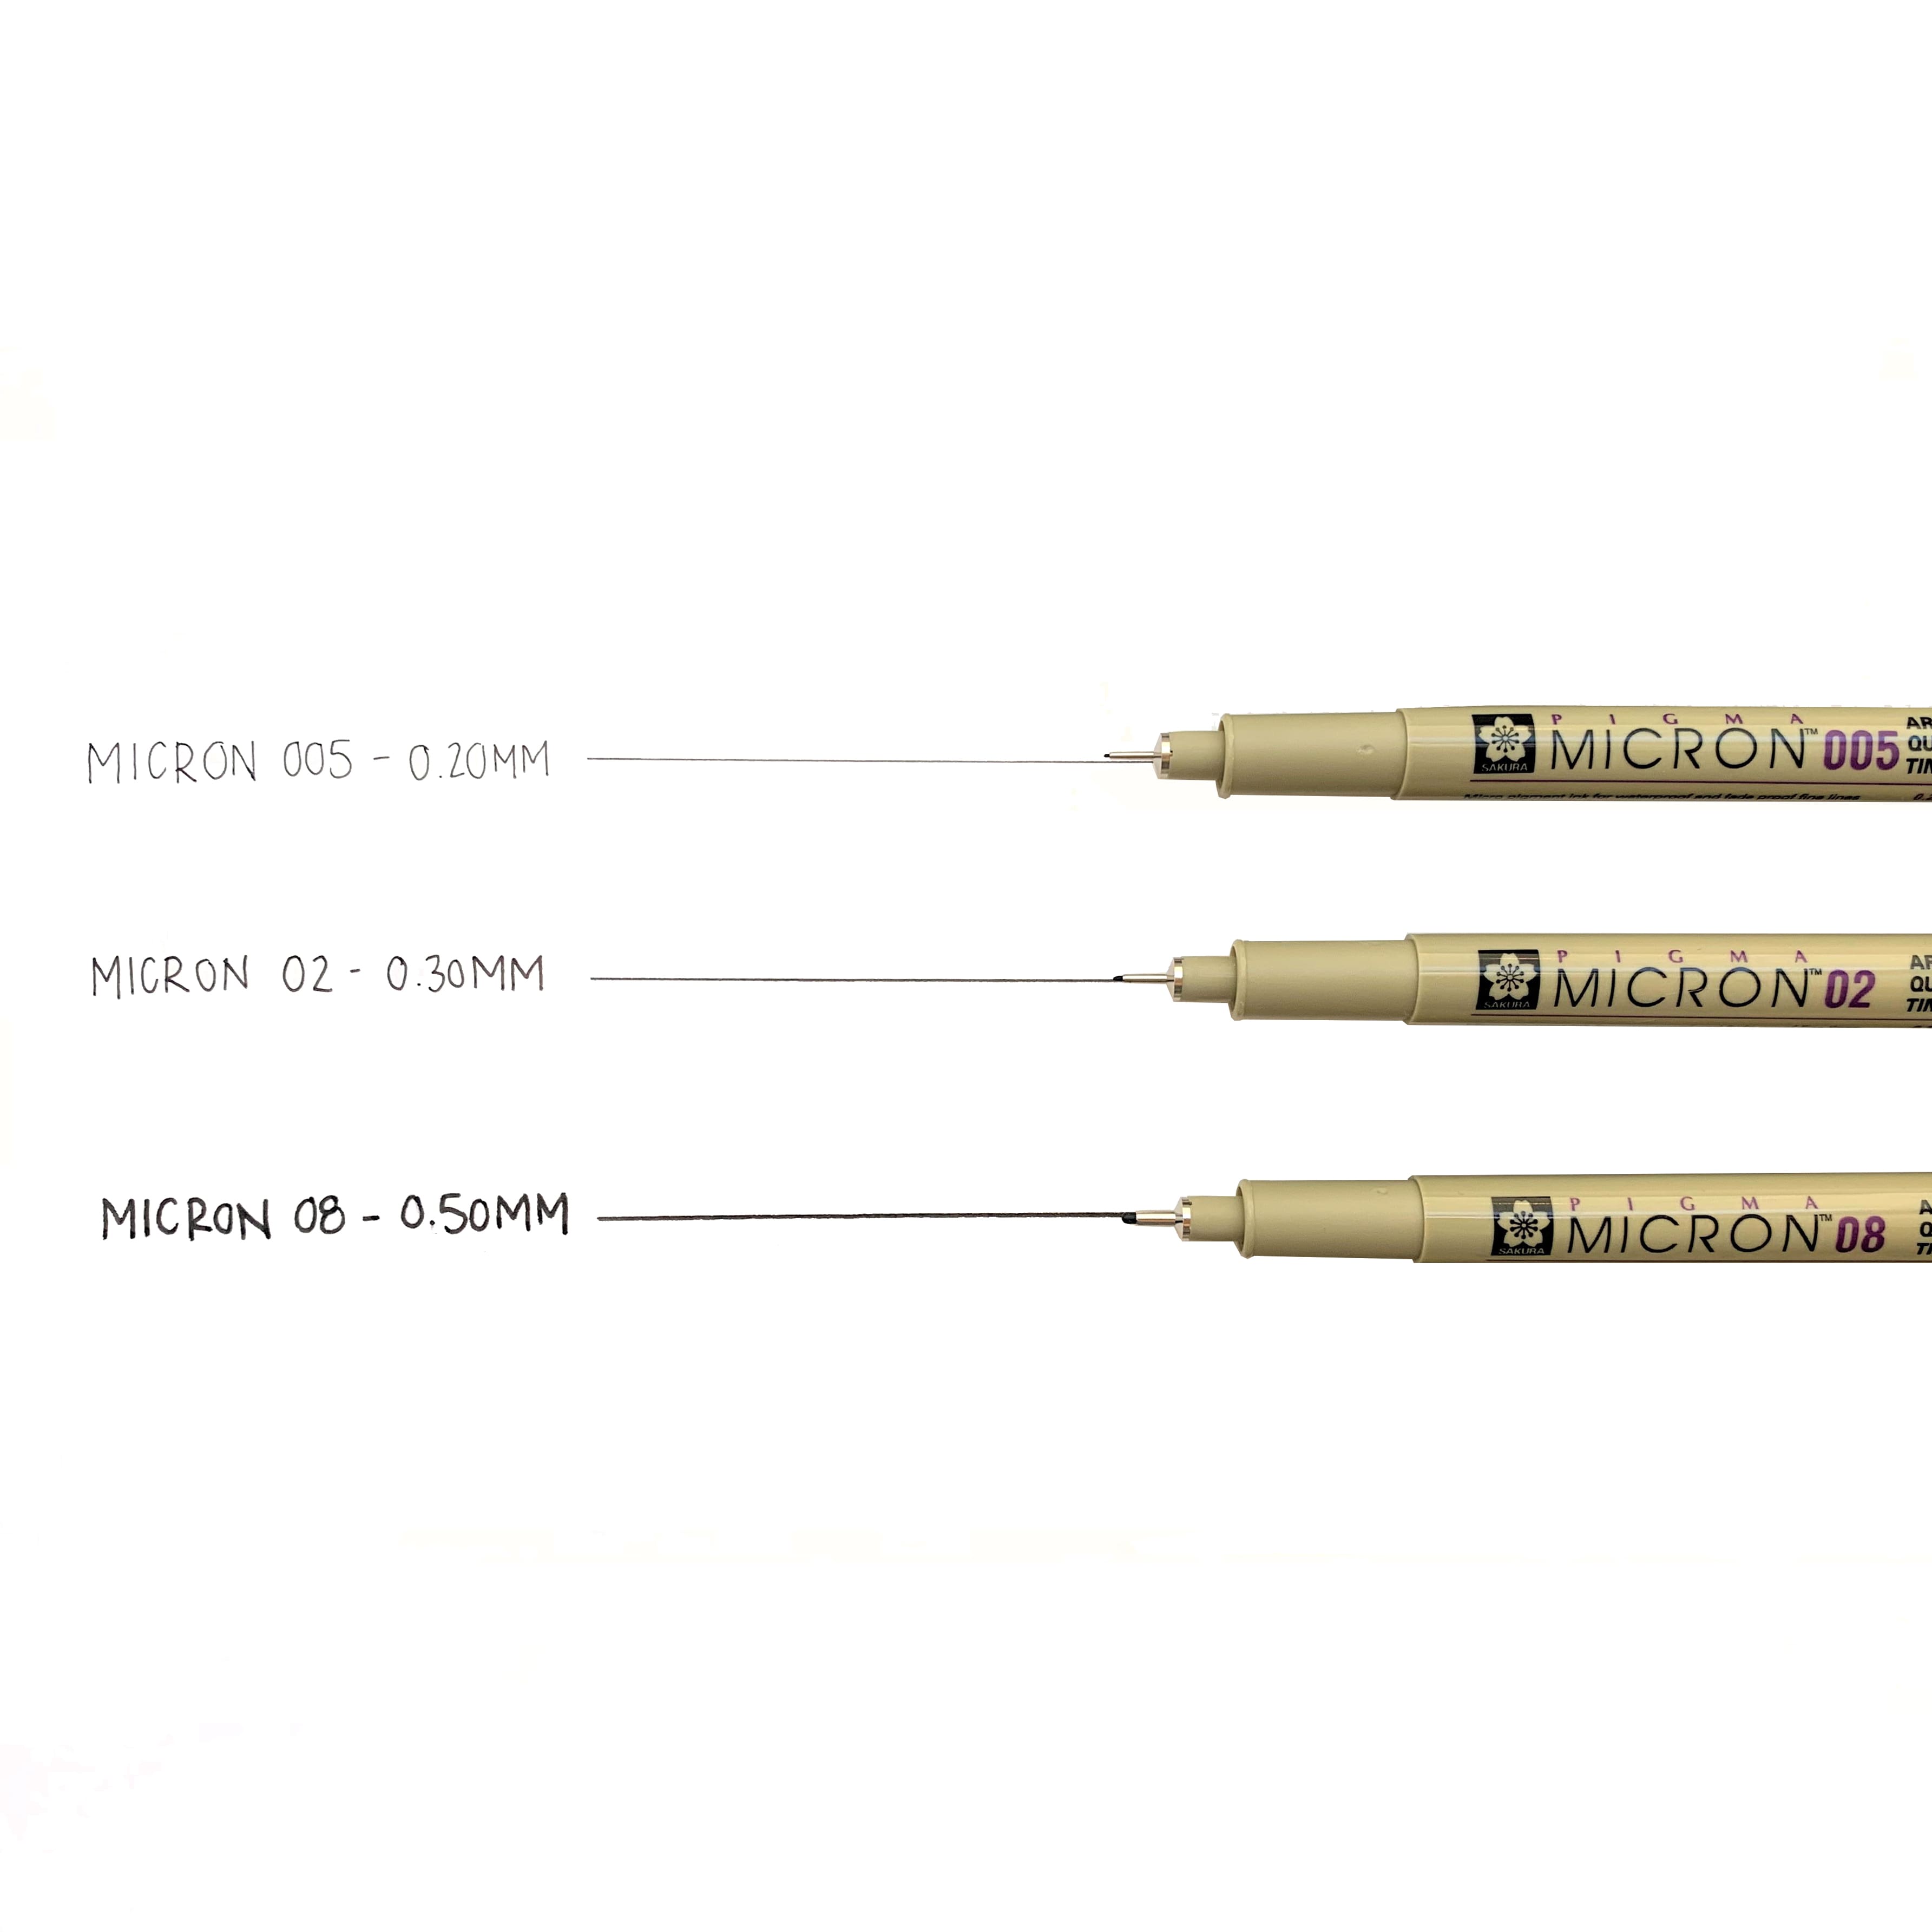 Pigma&#xAE; Micron&#x2122; Fine Line Black 3 Piece Pen Set